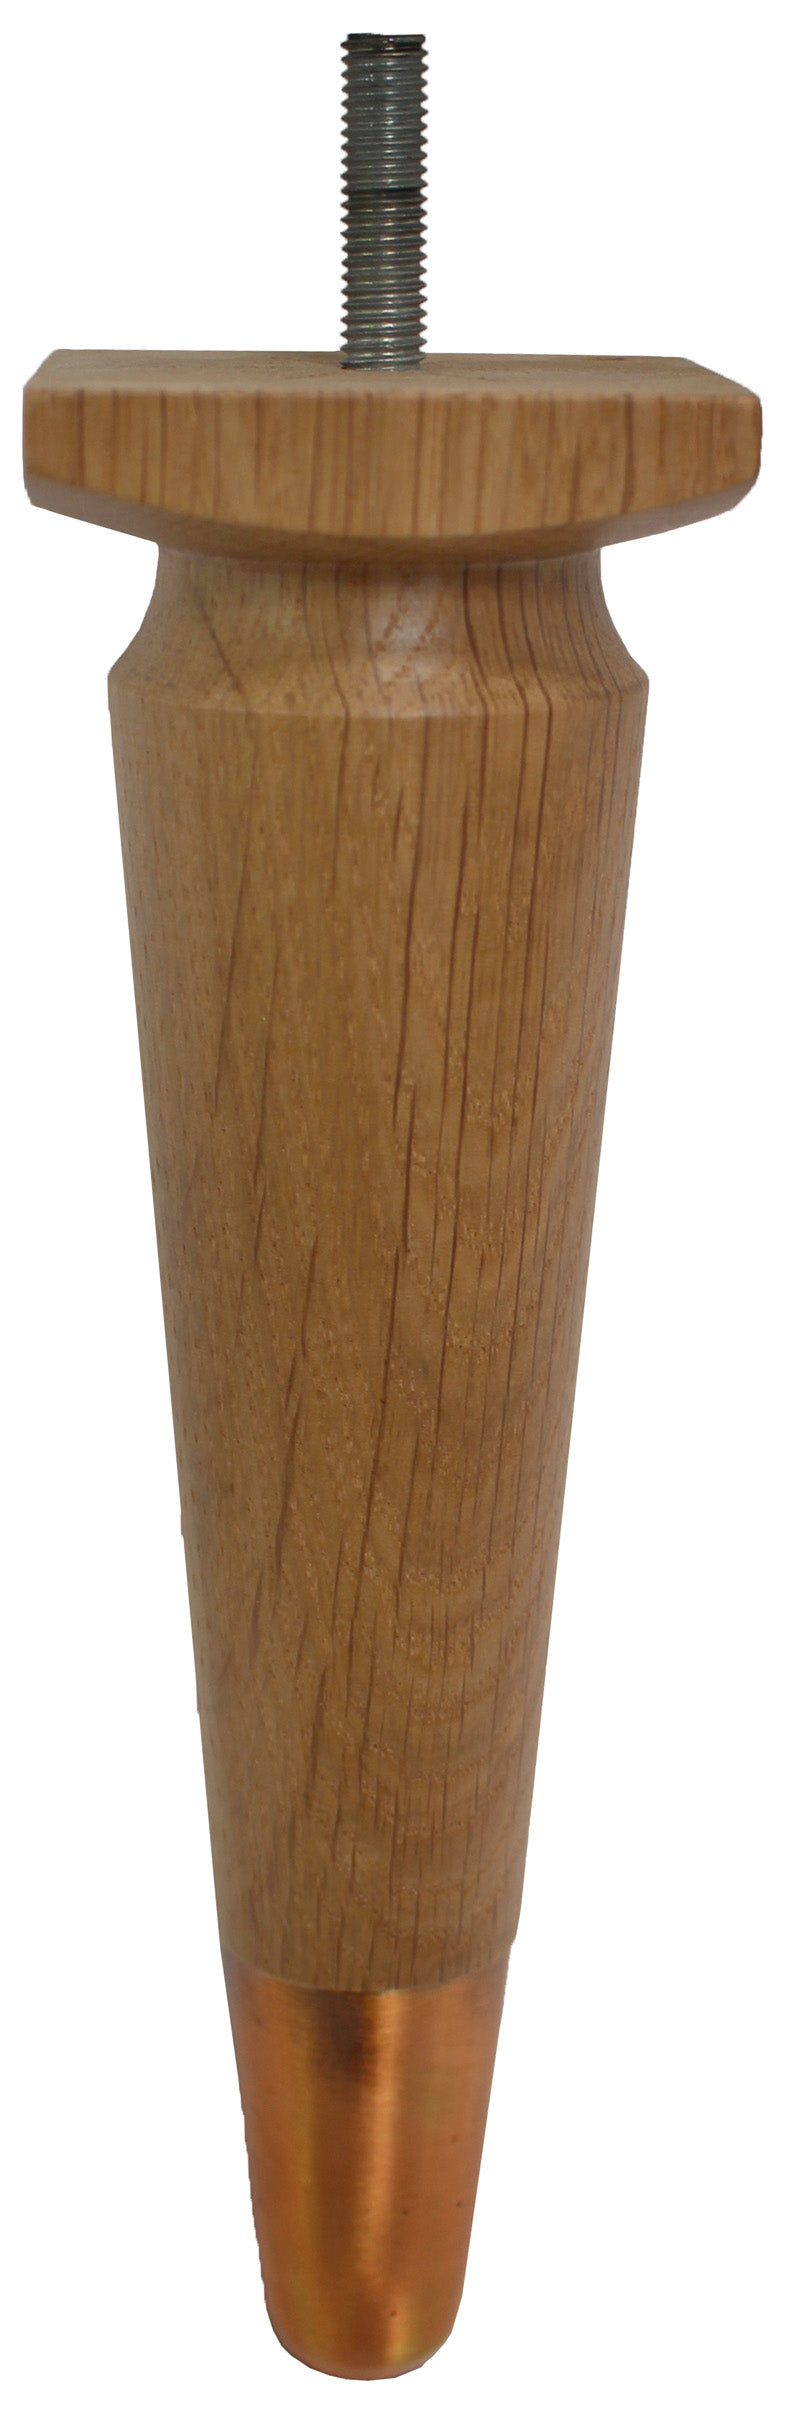 Thelma Solid Oak Furniture Legs - Natural Finish - Oiled Bronze Slipper Cups - Set of 4